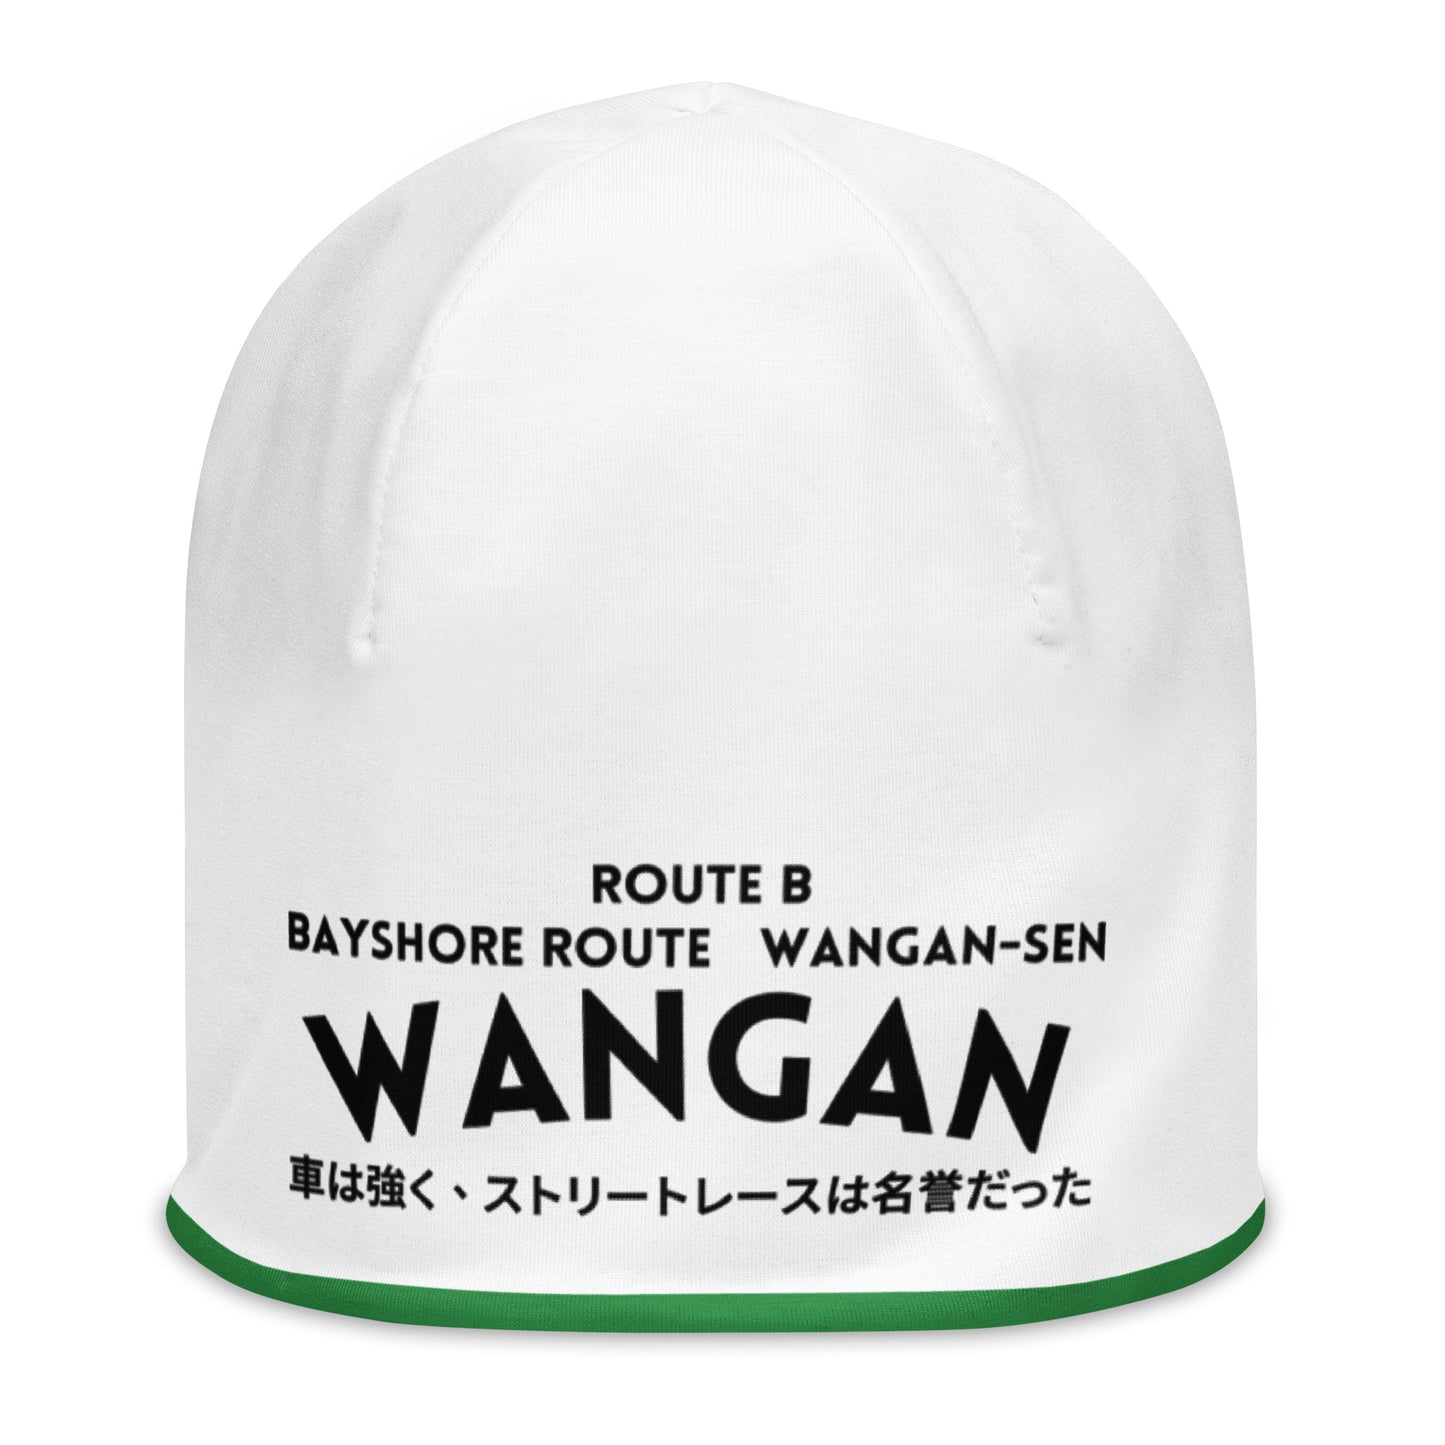 Wangan Route B Beanie hat - White